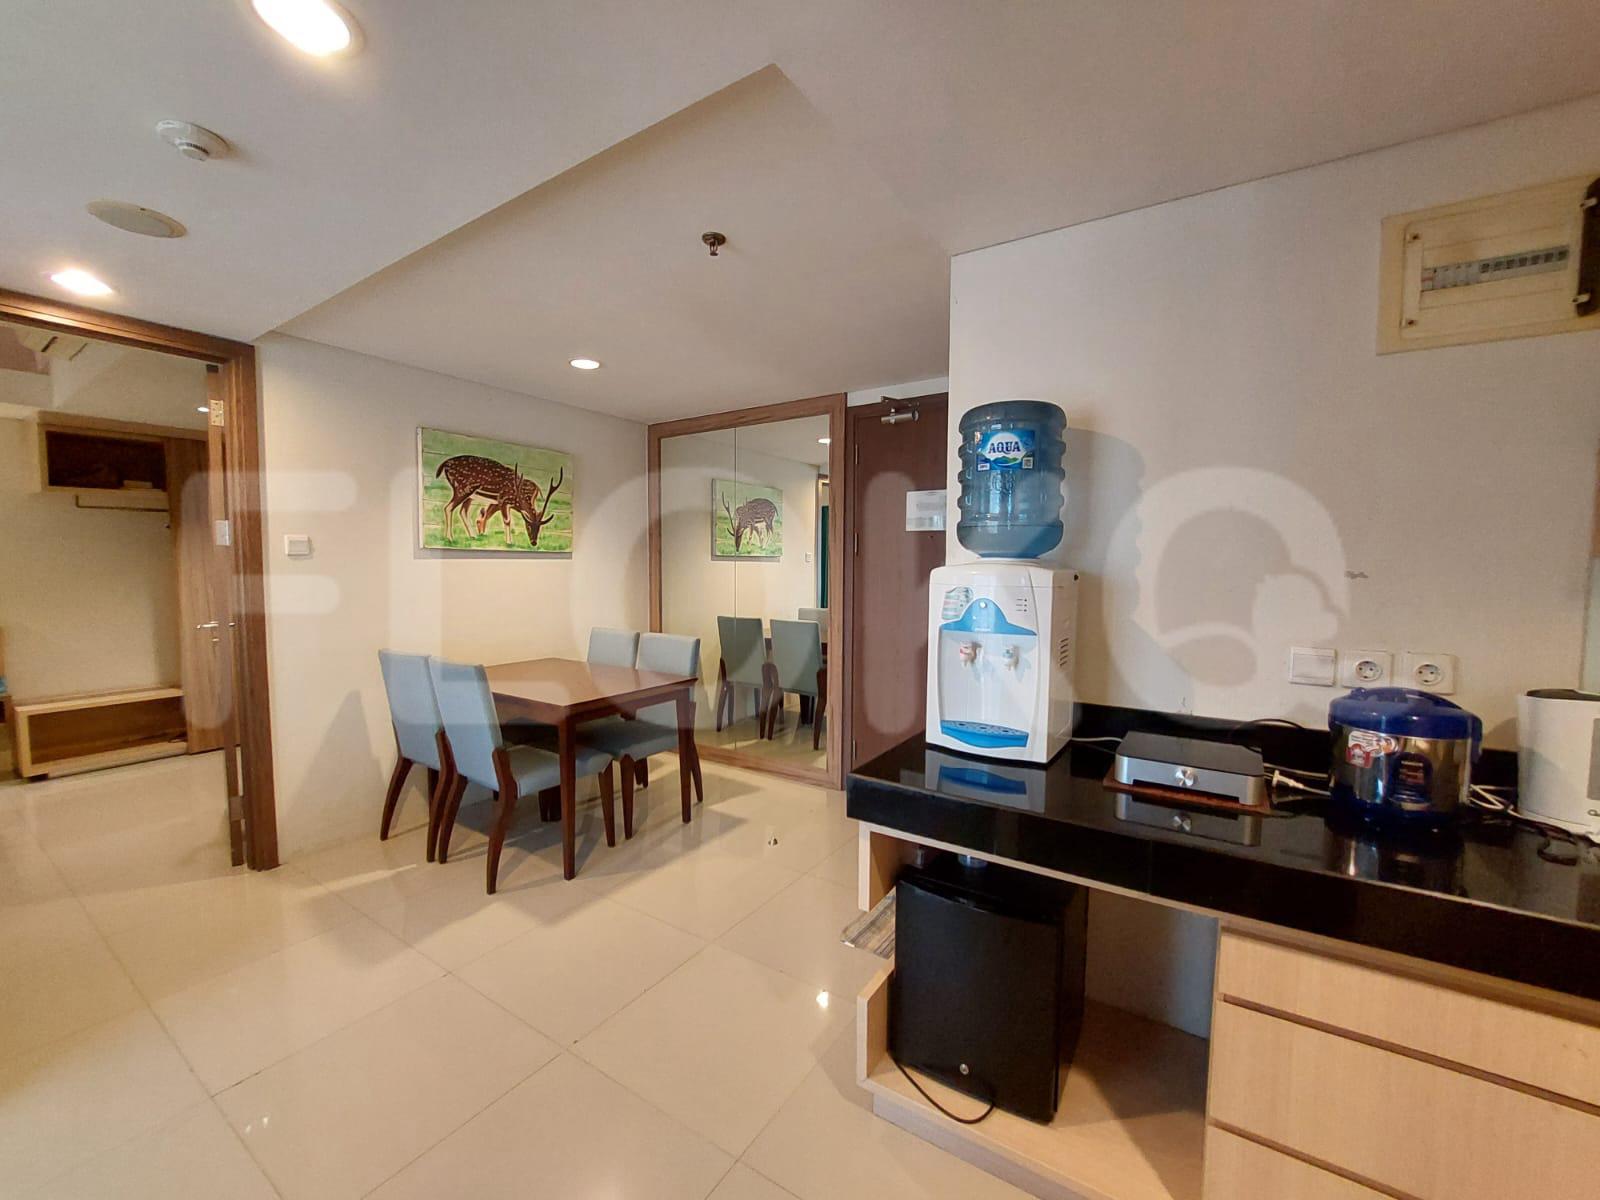 2 Bedroom on 9th Floor fbo460 for Rent in Bogor Icon